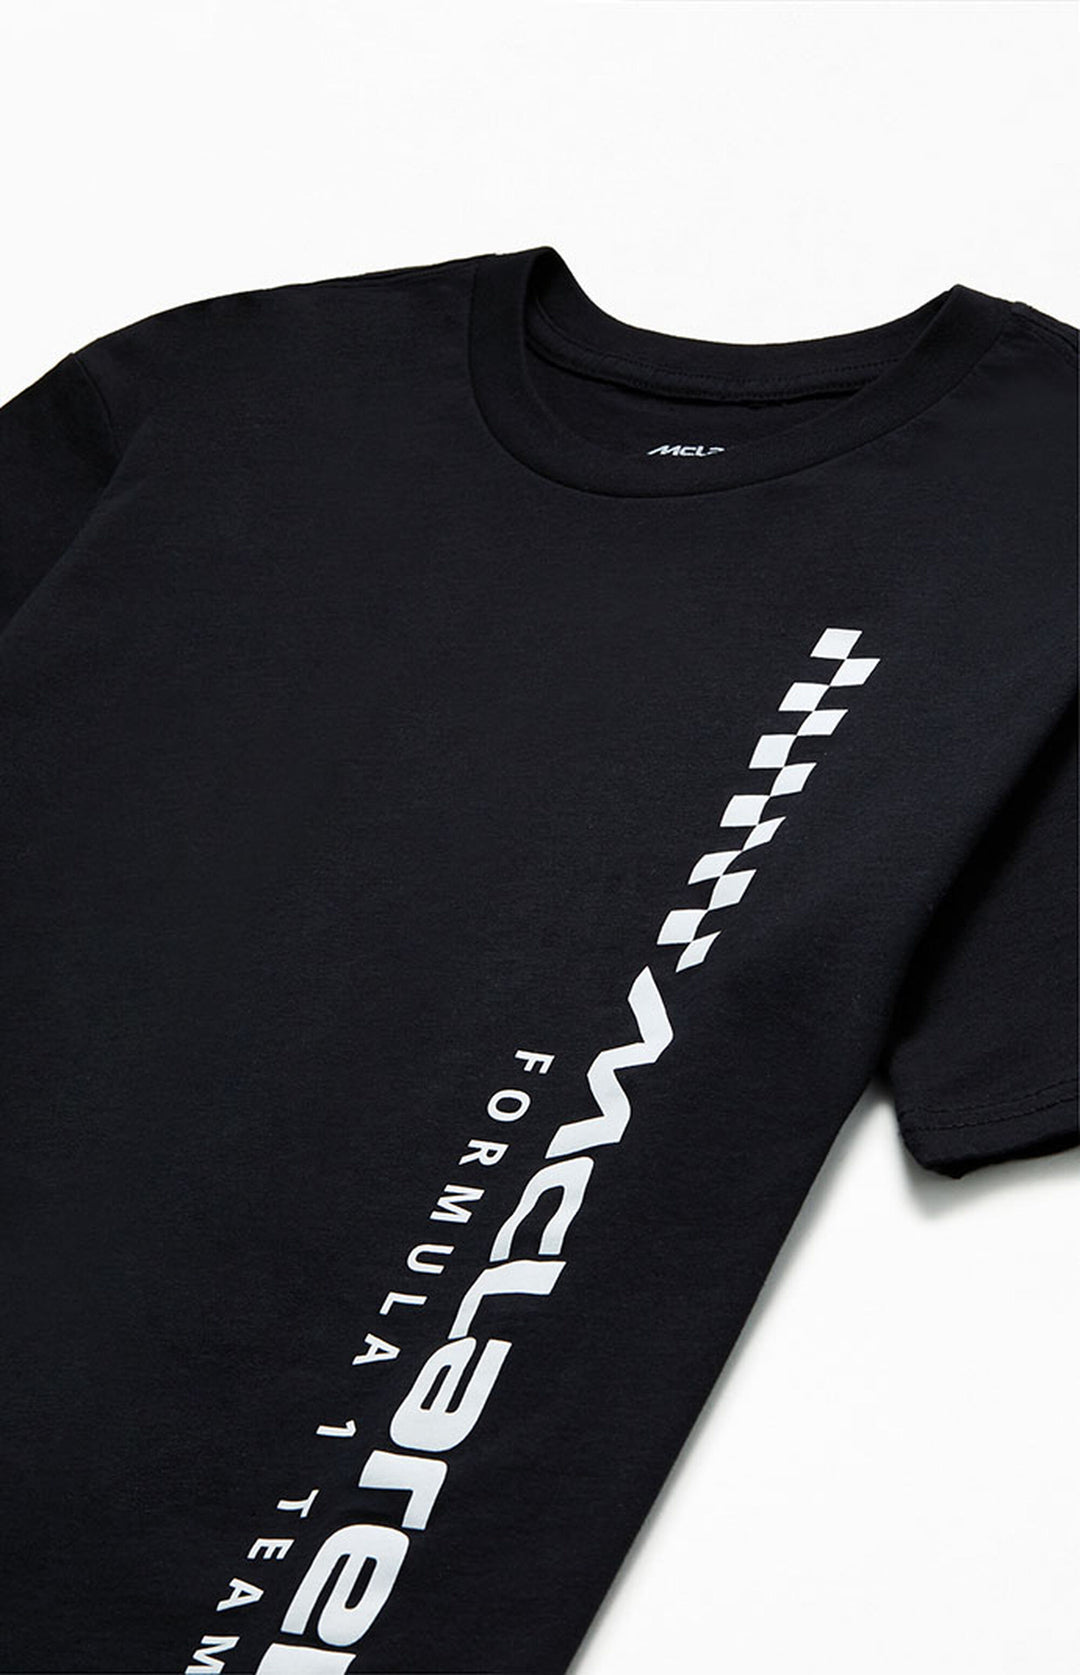 McLaren Formula 1™ Team T-Shirt - Unisex - Black